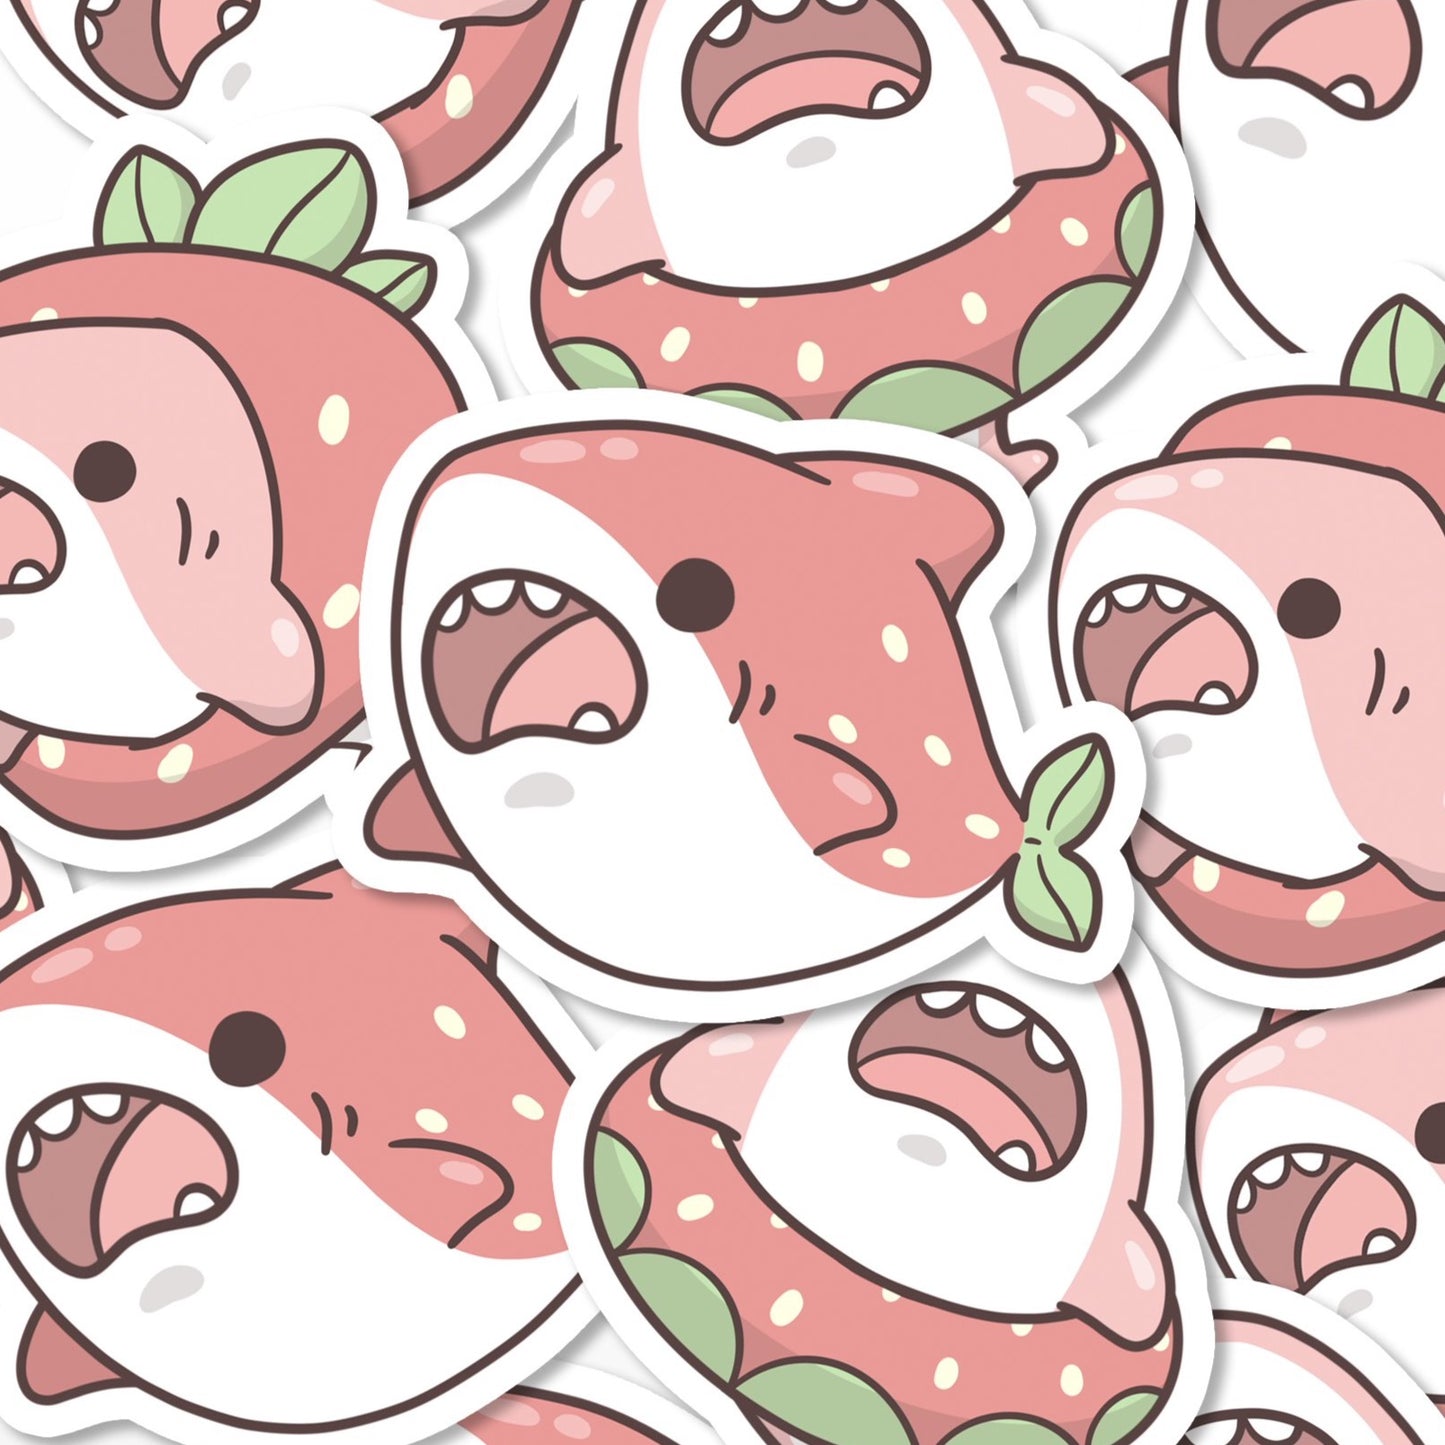 Strawberry Shark Stickers - KyariKreations